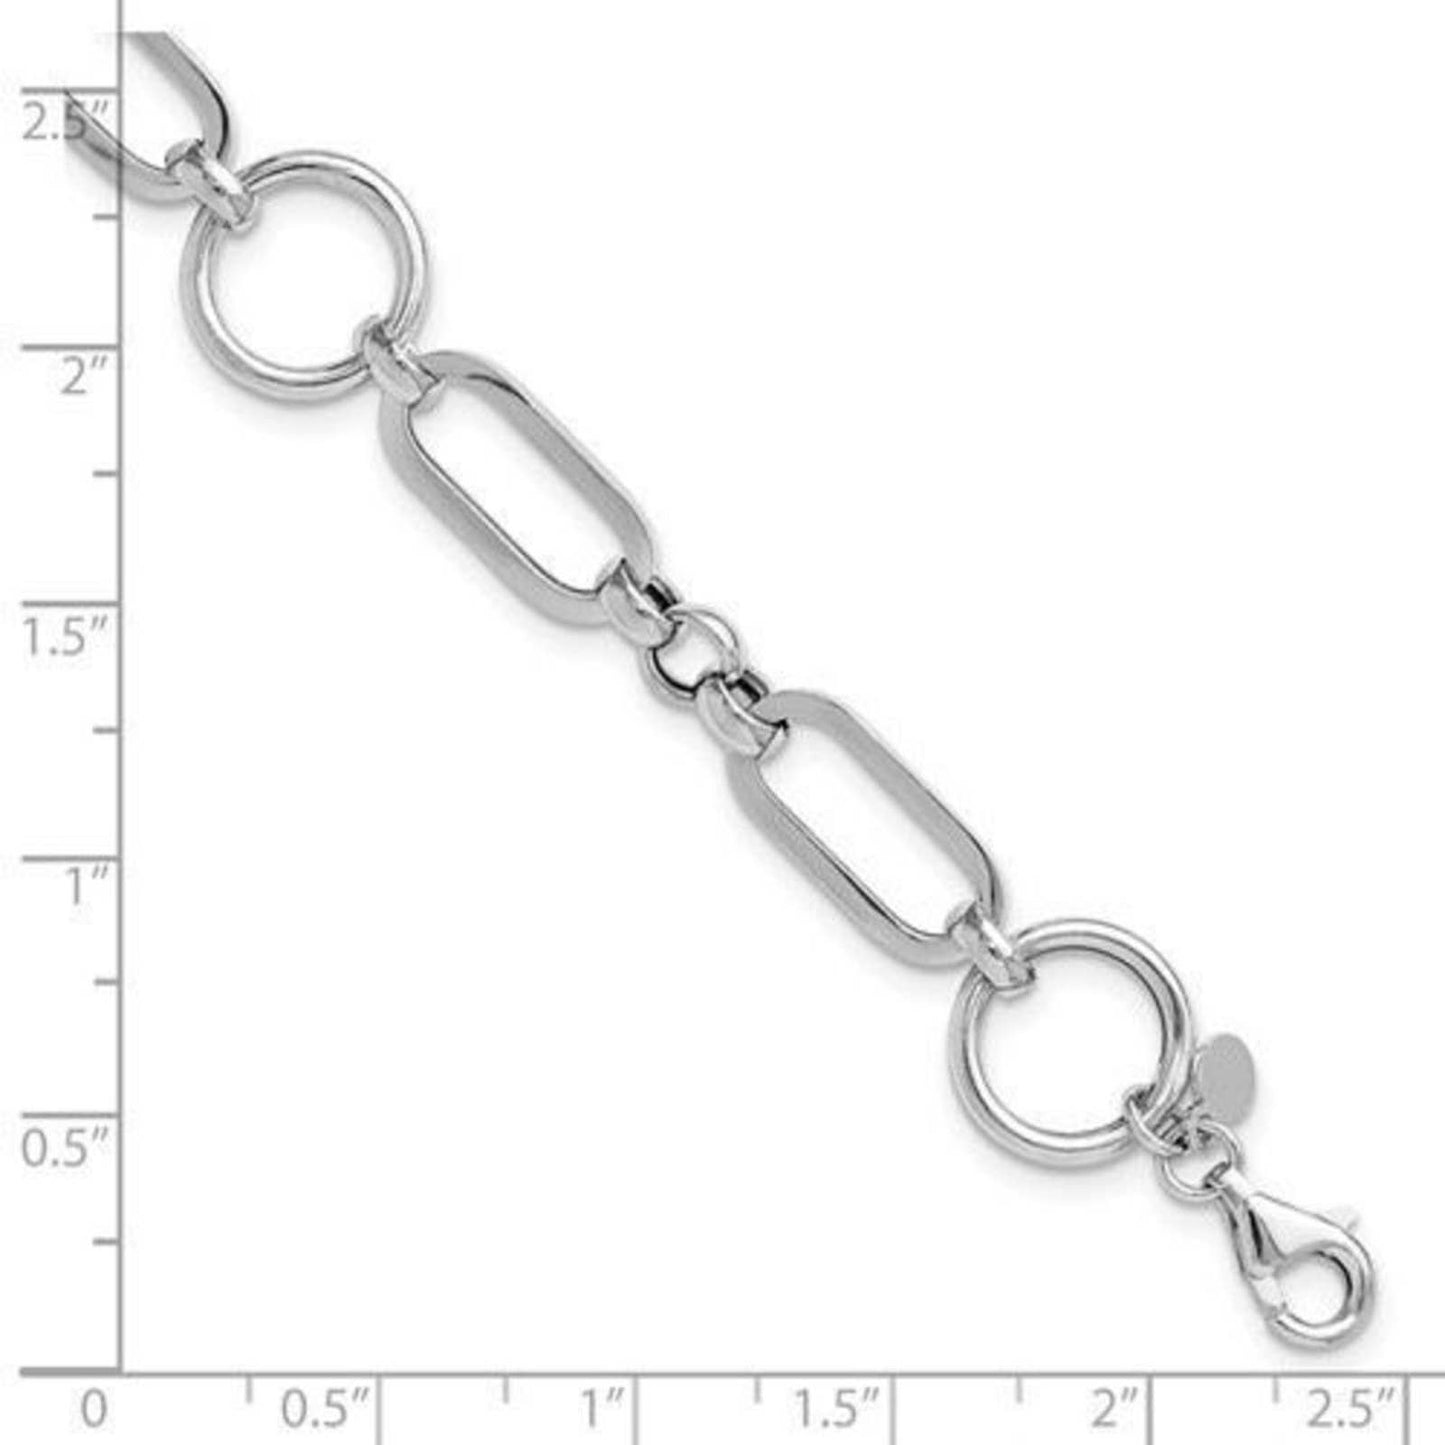 Sterling Silver Fancy Link Bracelet made by Leslies Jewelry